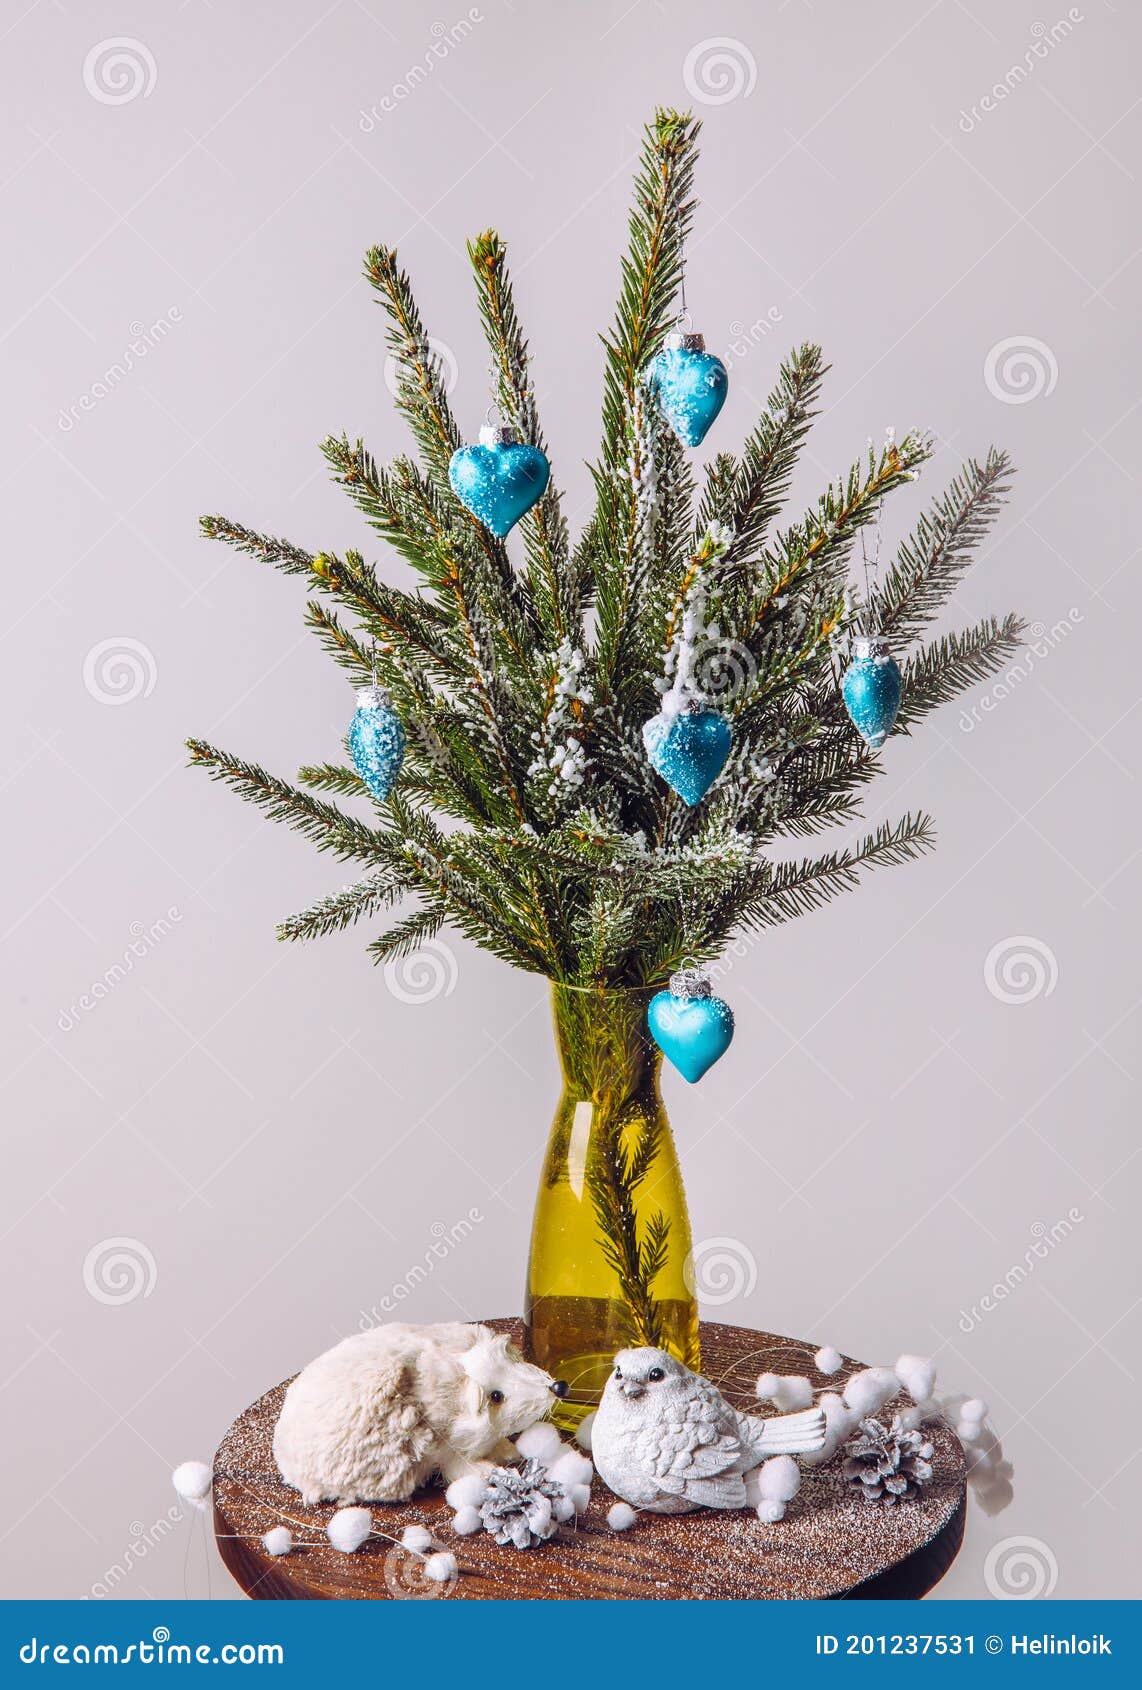 Spray Snow Decorated Christmas Tree Branches in Winter Art Crafts. Studio  Shot Studio Lights Indoors White Minimalist Backgroun Stock Image - Image  of activity, figurine: 201237531